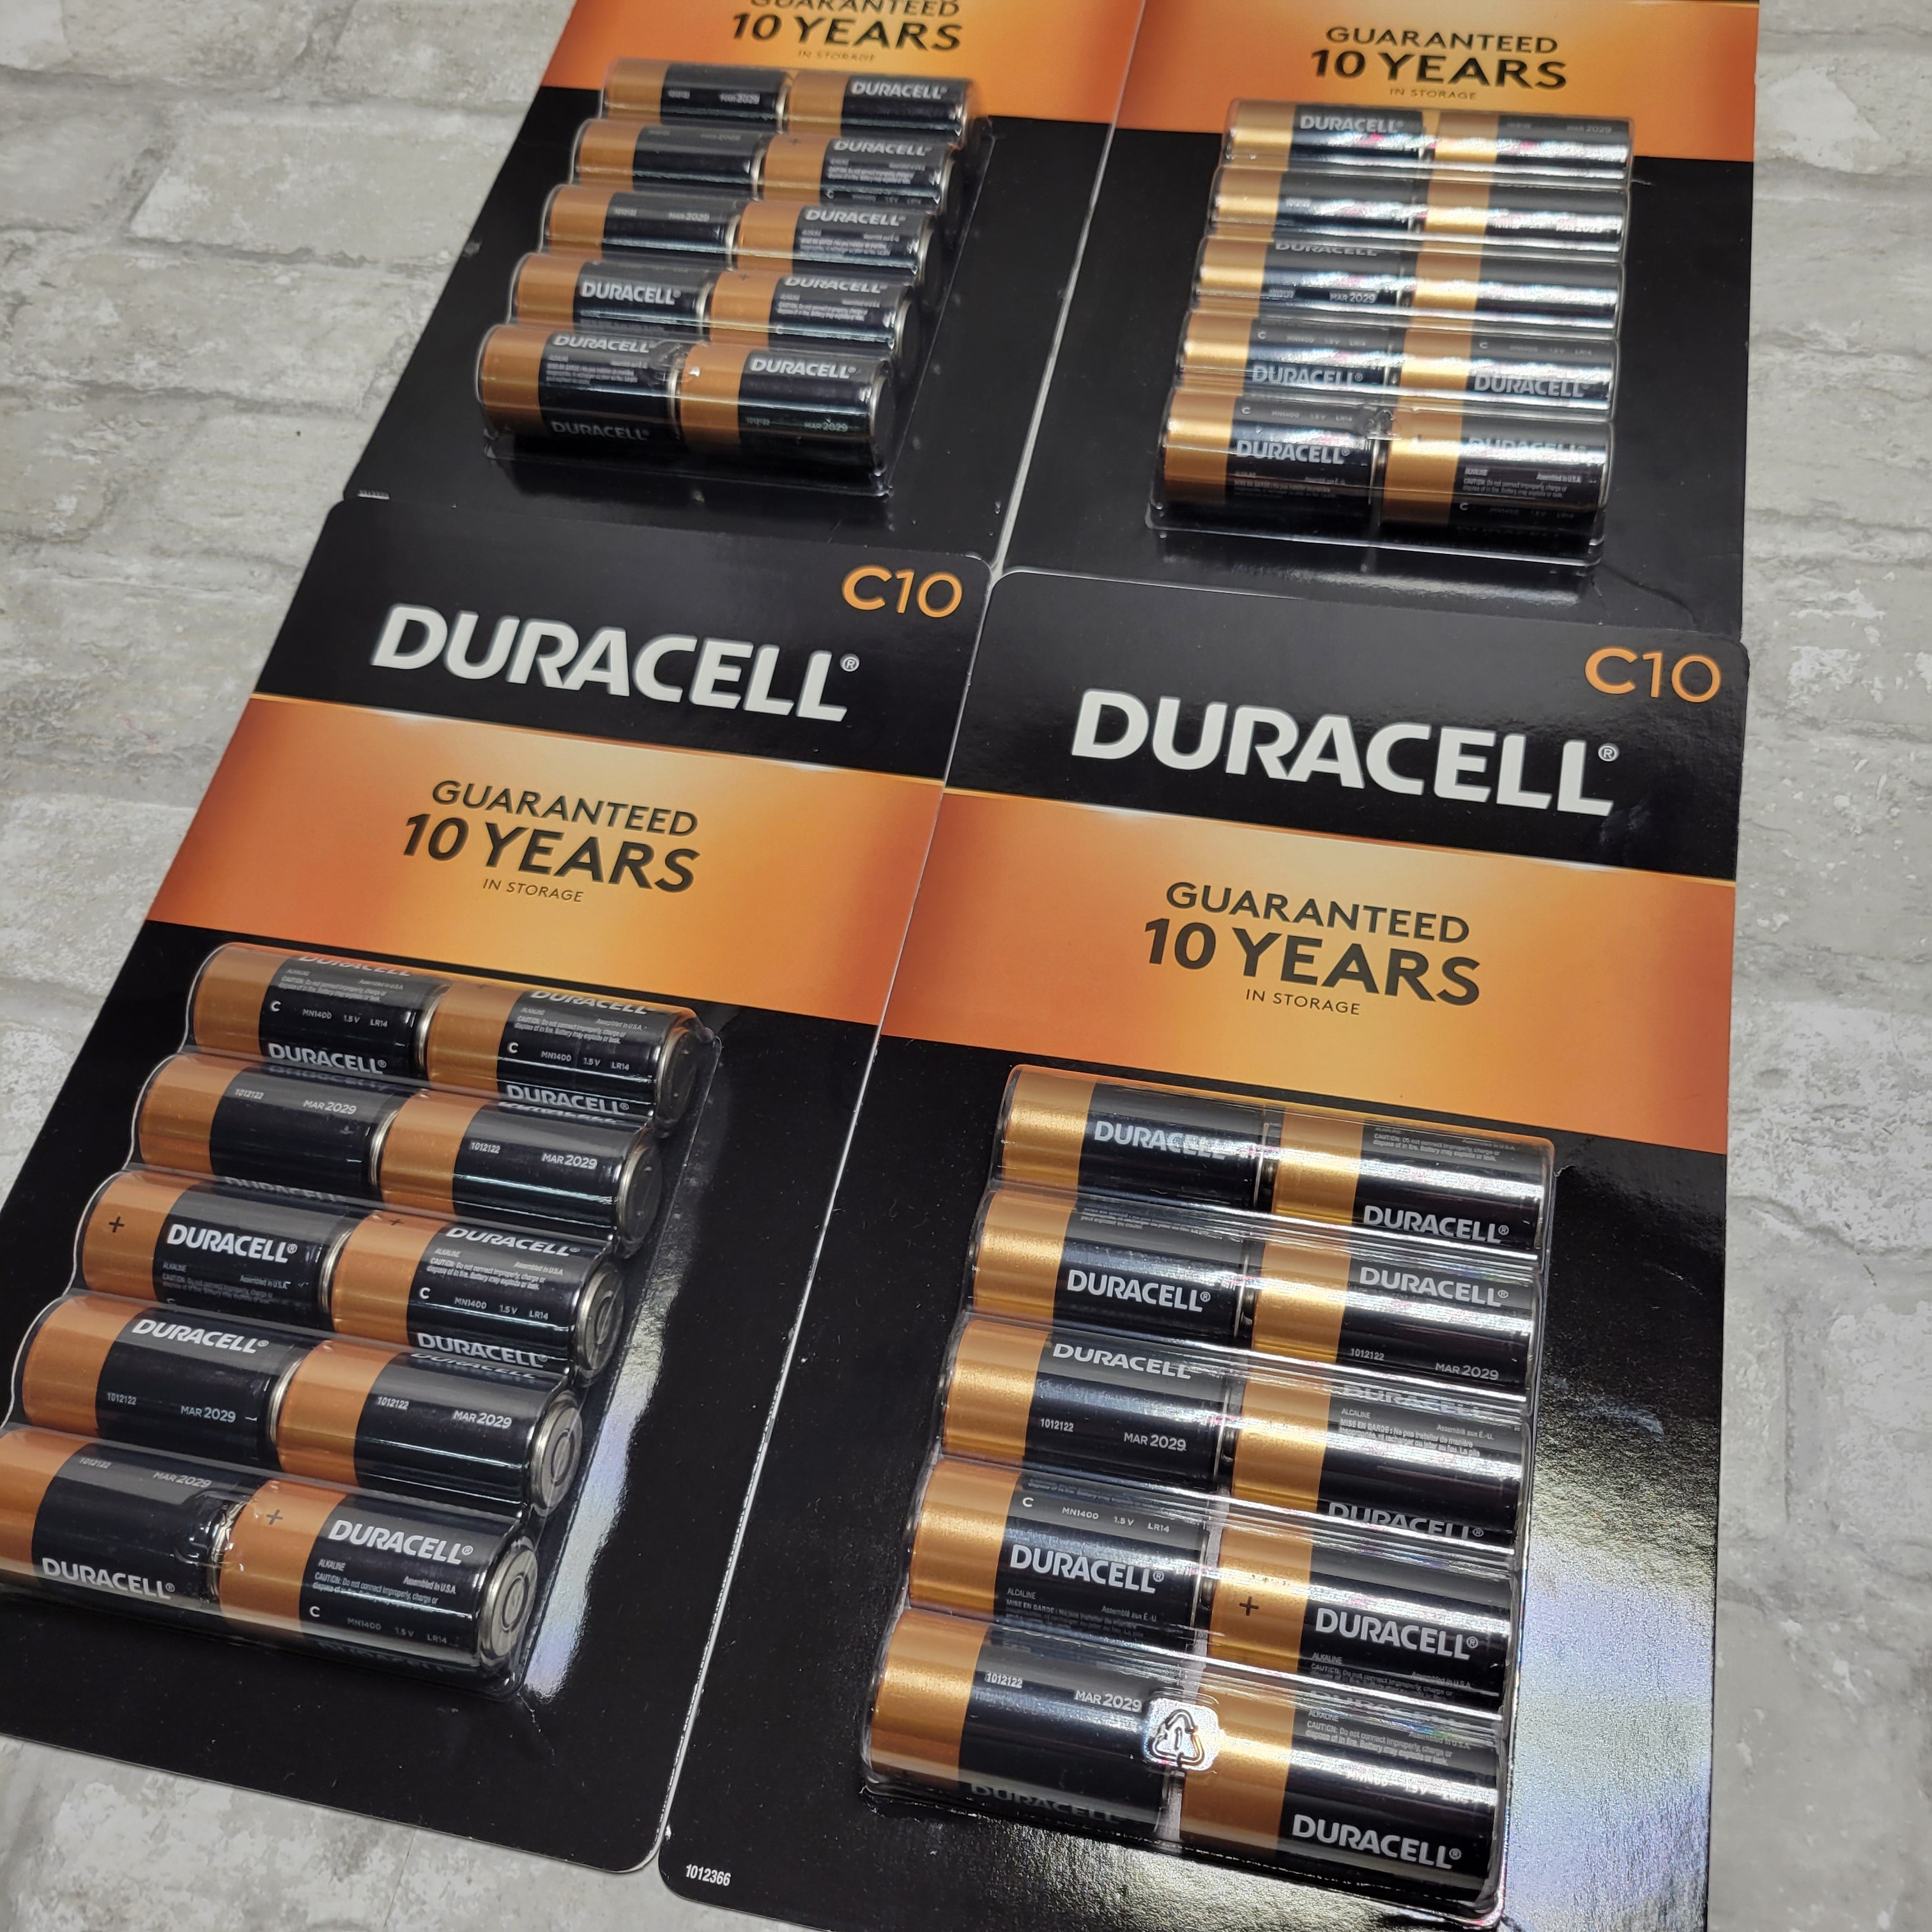 DURACELL 80240709 Coppertop Alkaline Batteries C - Exp. 3/2029,10 pk, Lot of 4 (8133094572270)